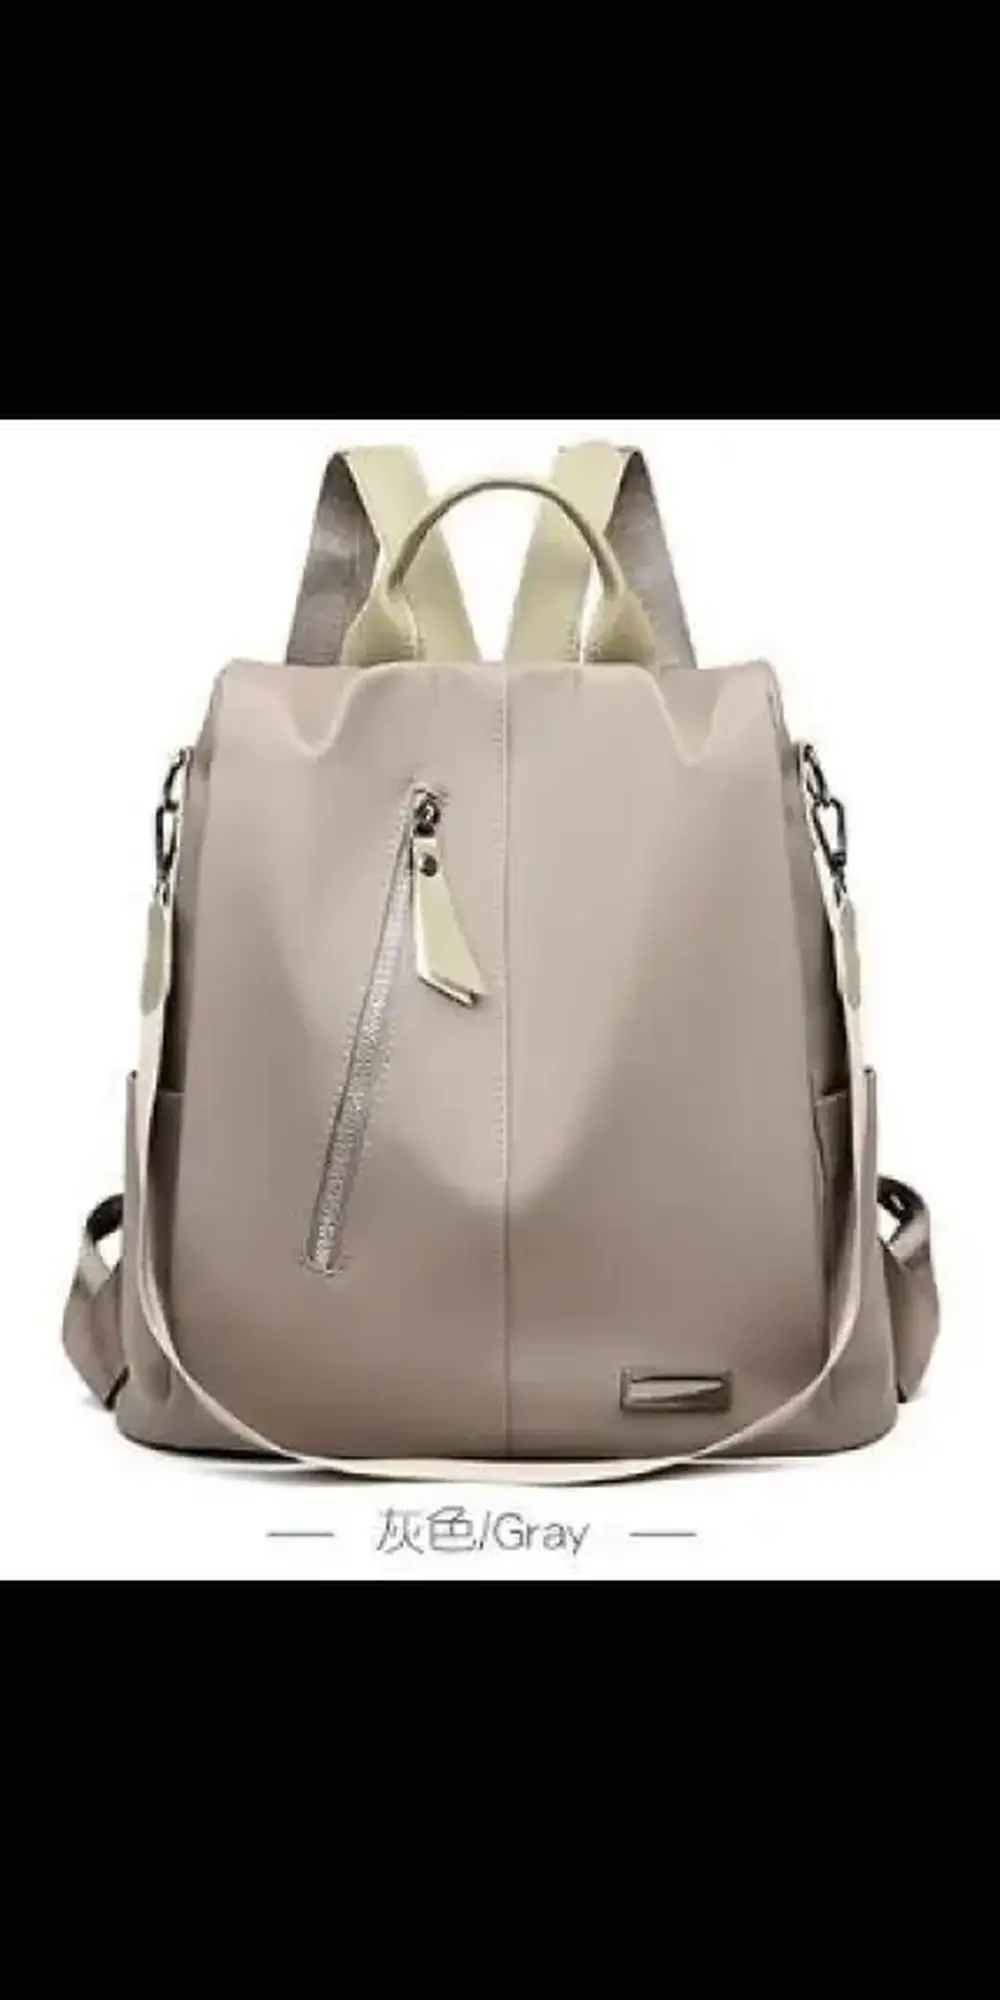 Oxford Cloth Backpack Nylon School Bag Women - Gray - bags